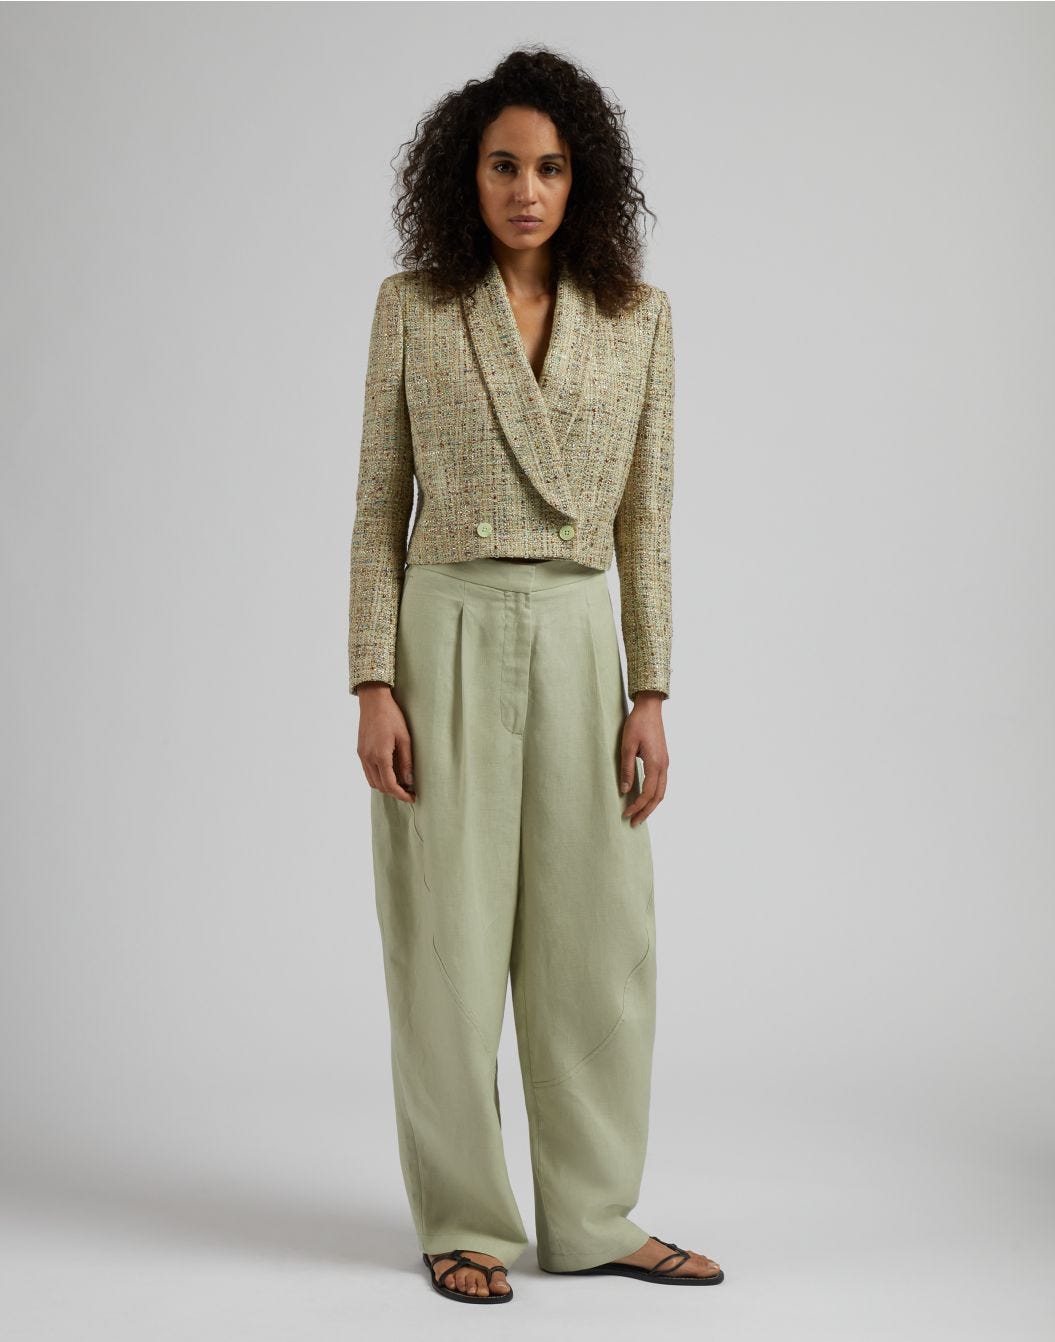 Green lurex woven cotton tweed short jacket